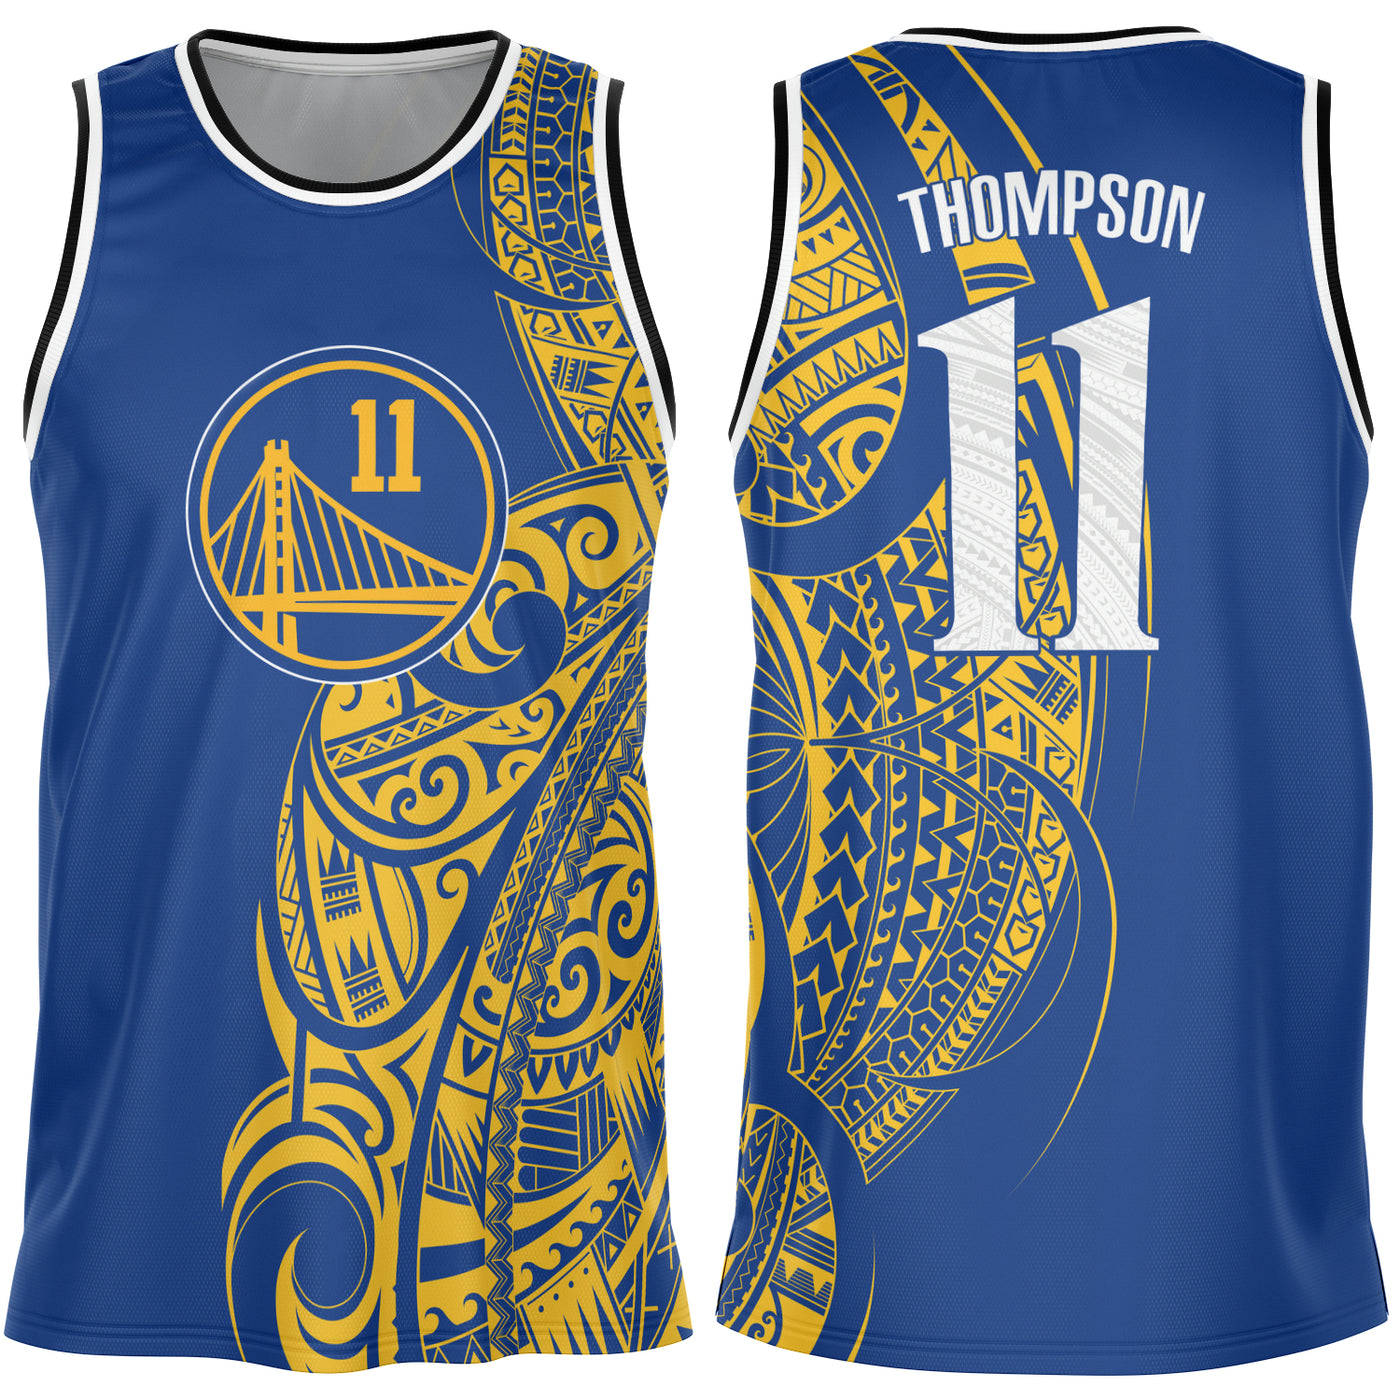 Klay Thompson Golden State Warriors Jerseys, Klay Thompson Shirts